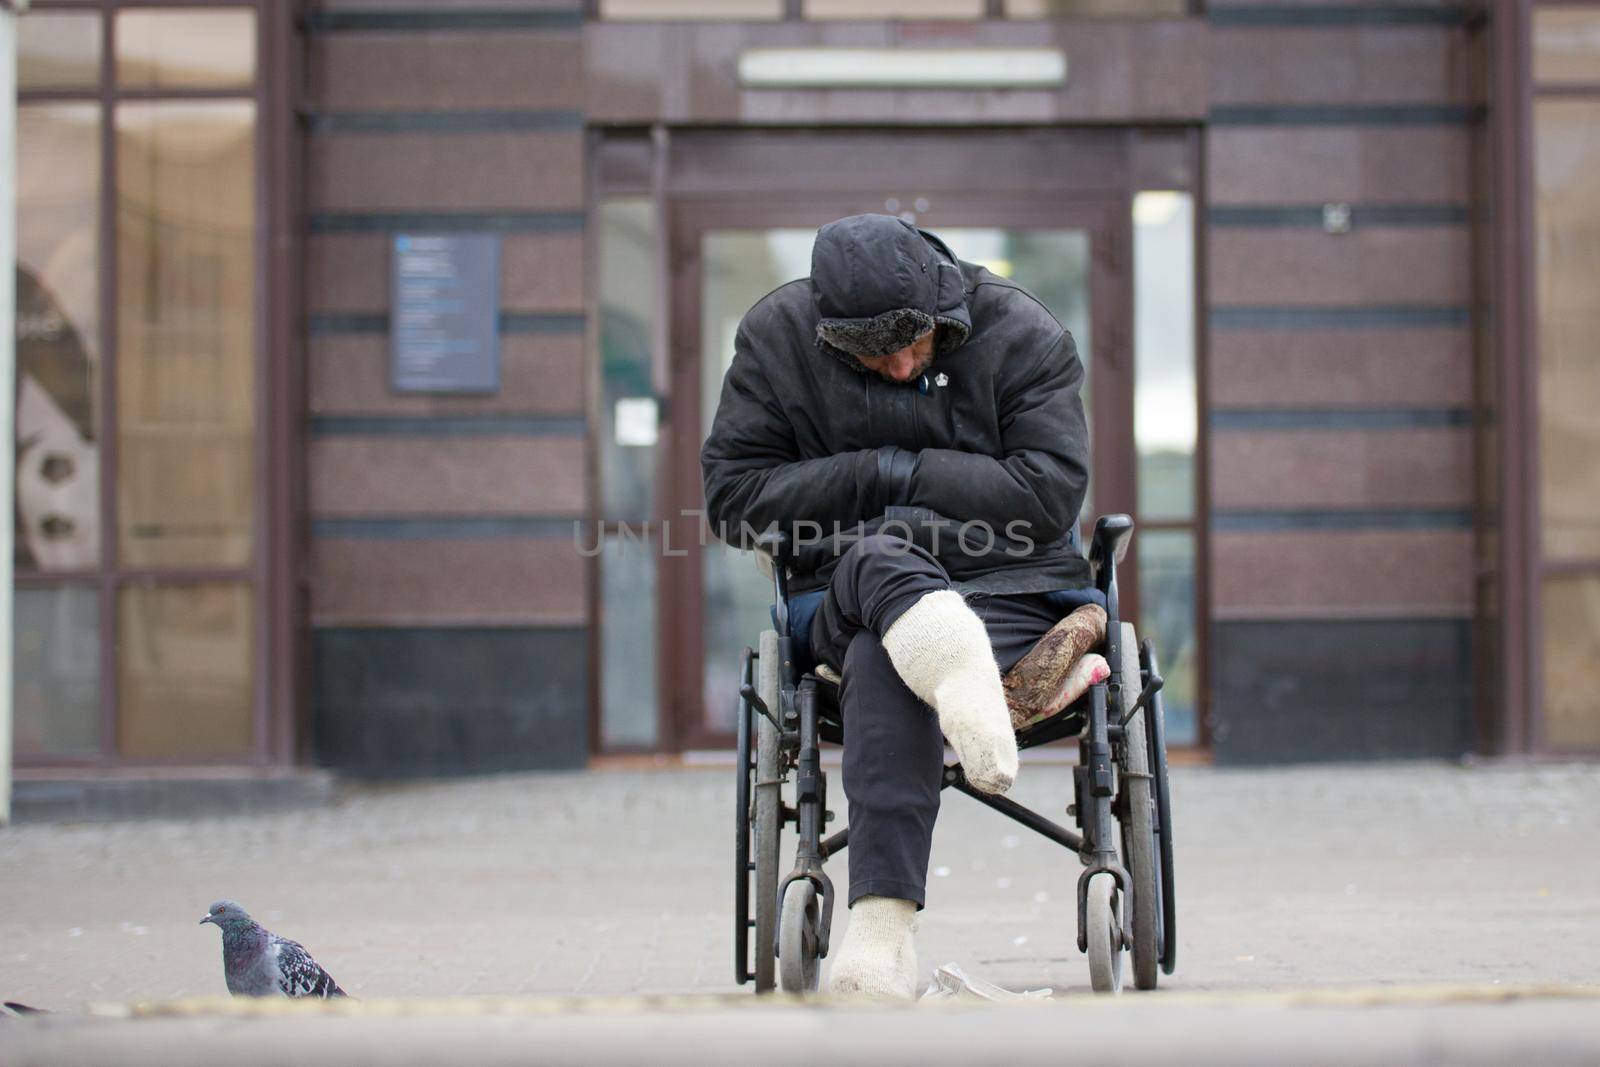 Russia, Kazan 14 september 2016, dowmtown - Disabled homeless man on a wheelchair begging for money - drunk beggar sleeping by Studia72